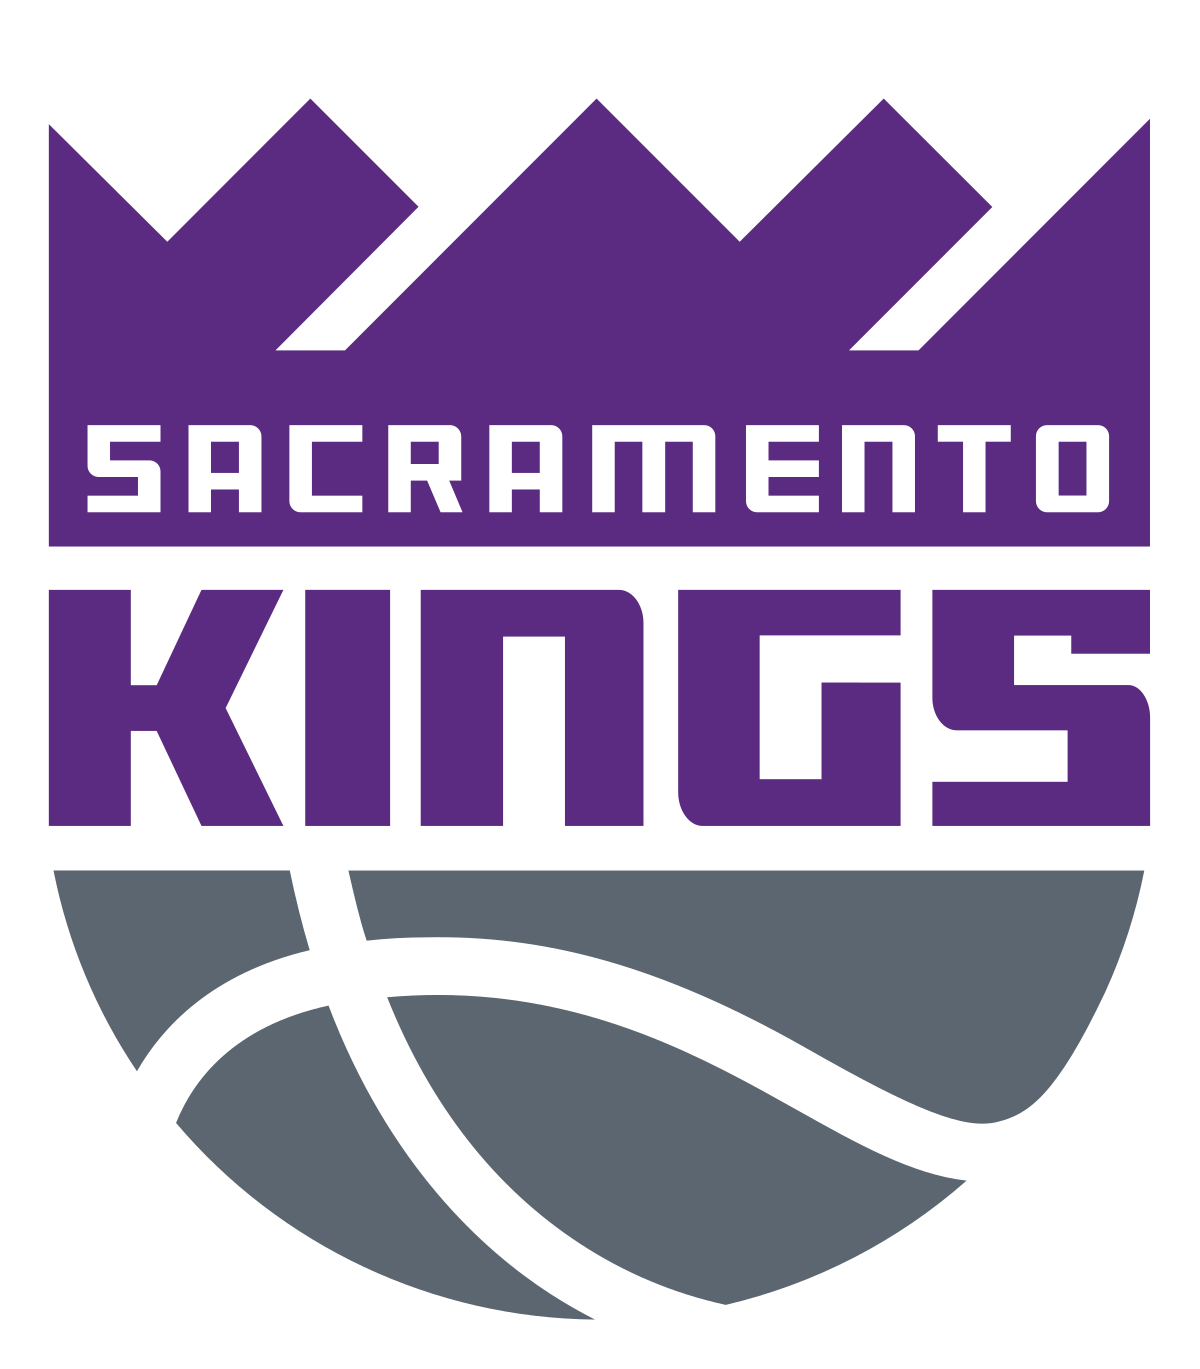 White and Blue Diamond Construction Logo - Sacramento Kings